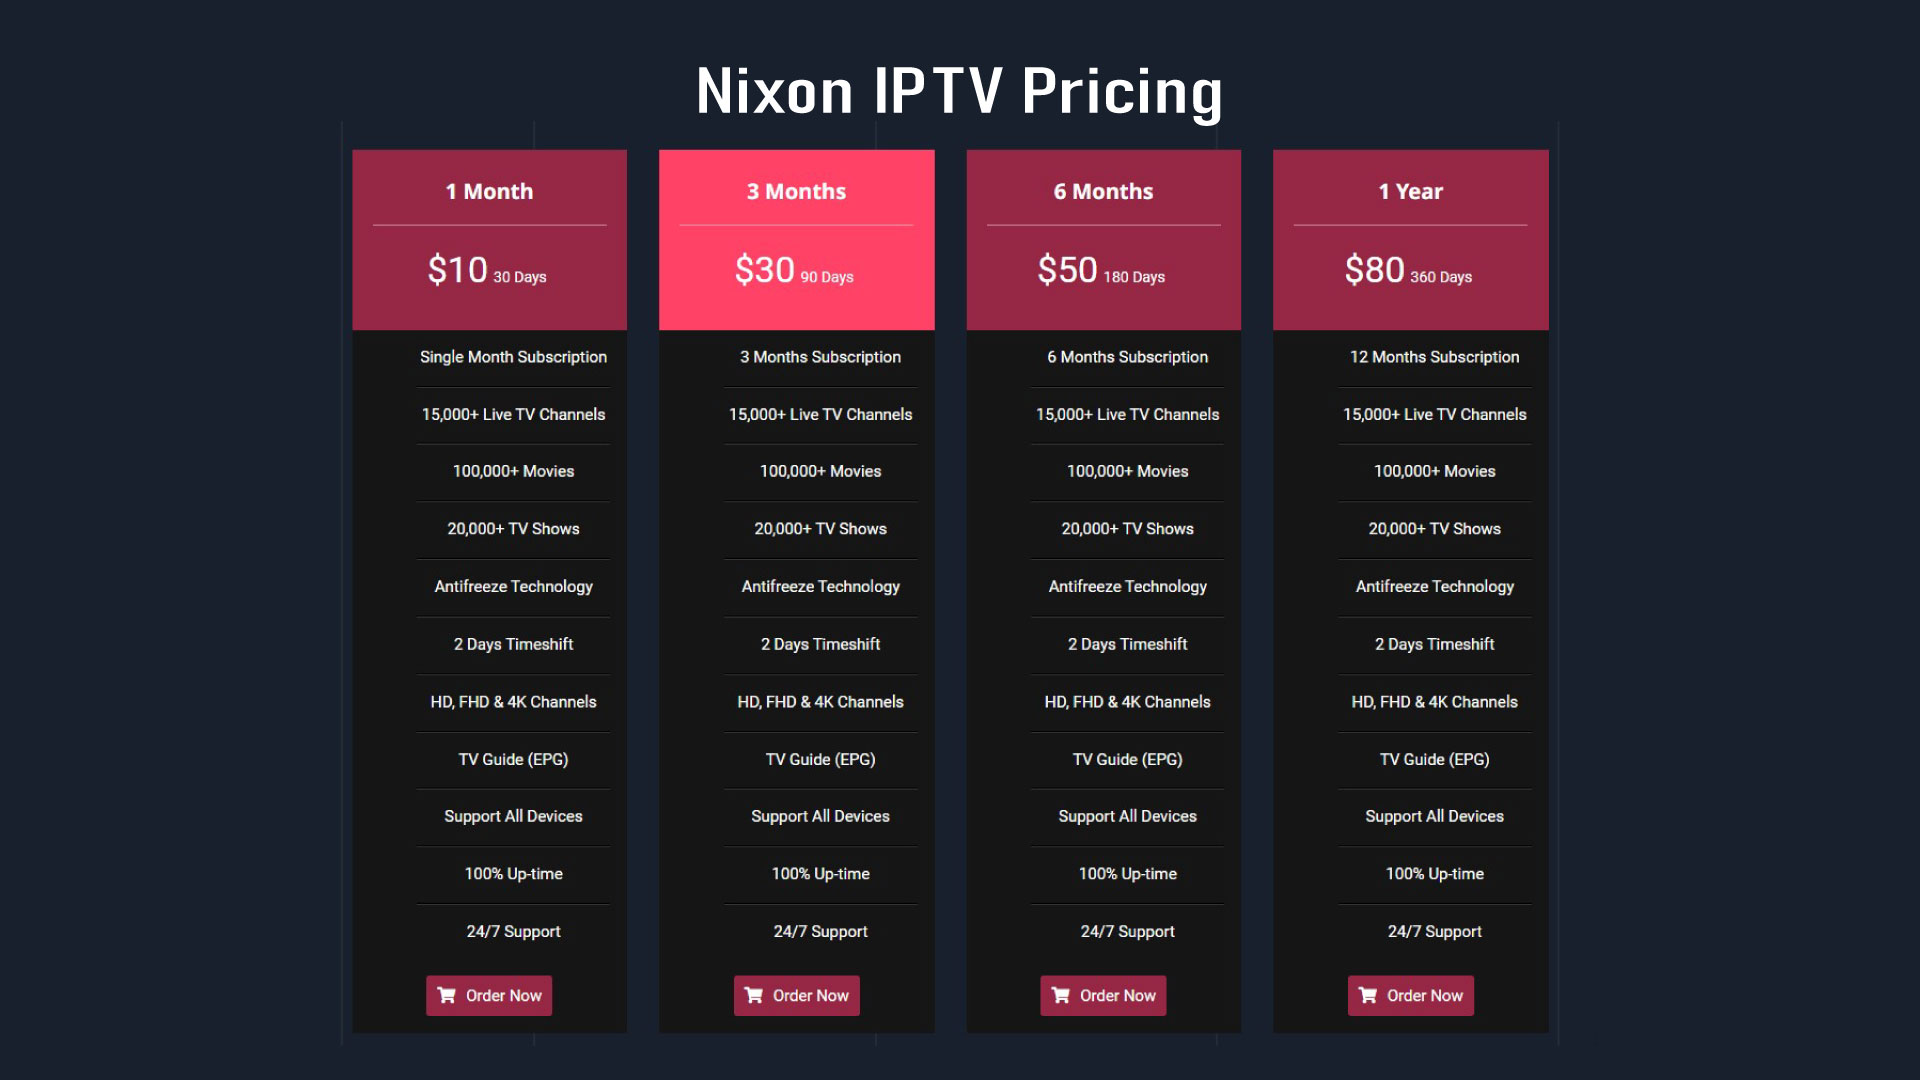 Nixon IPTV Pricing